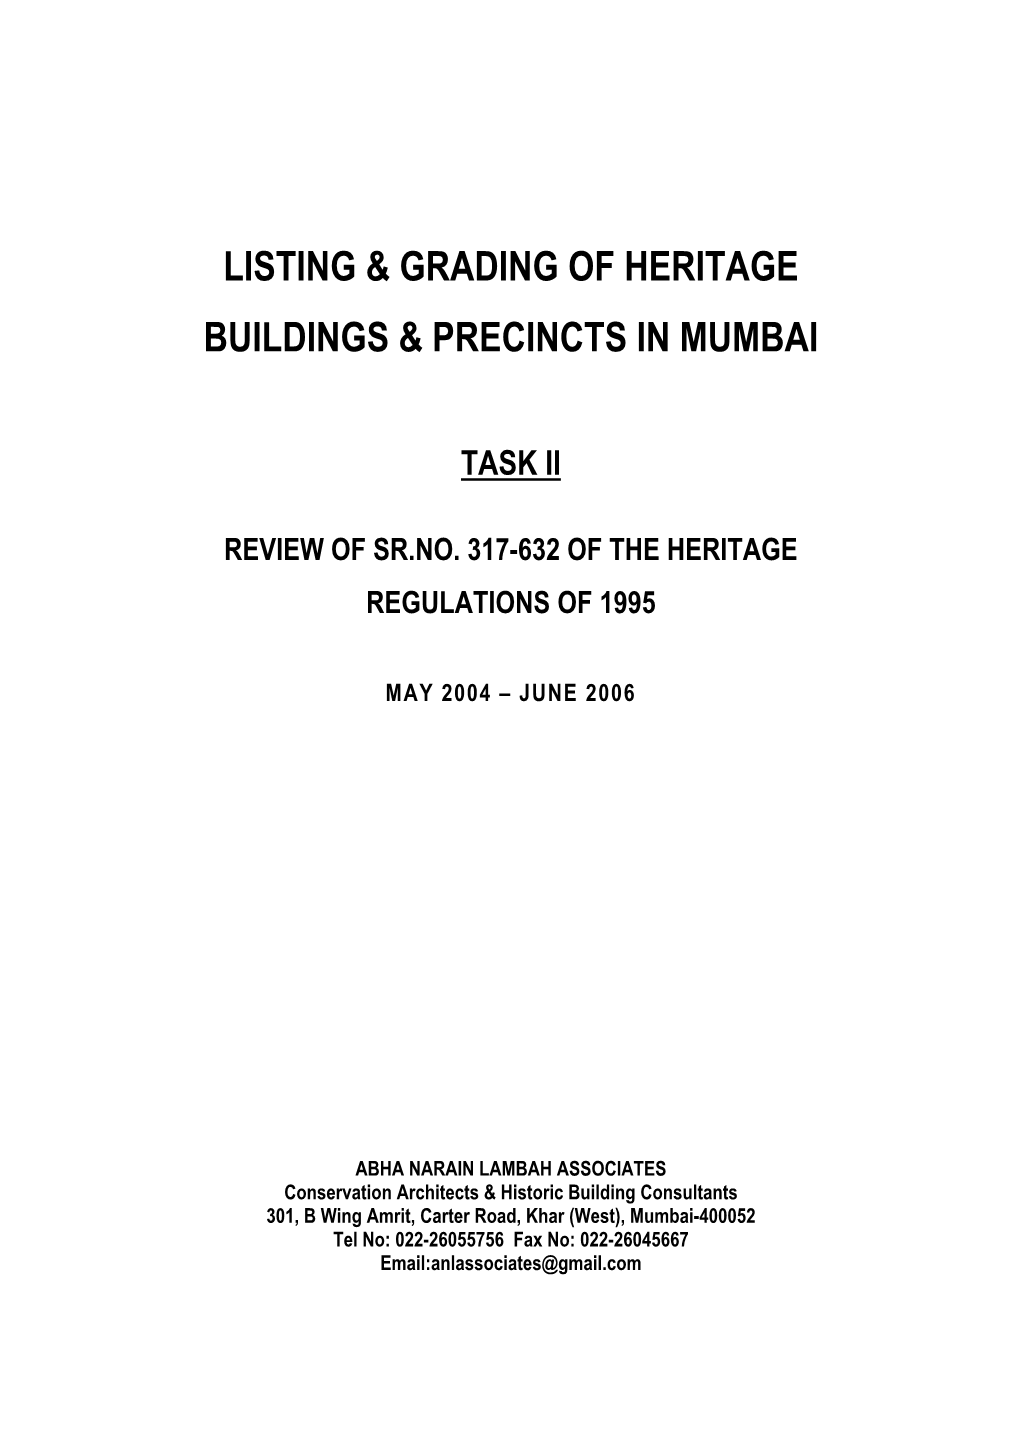 Listing & Grading of Heritage Buildings & Precincts In